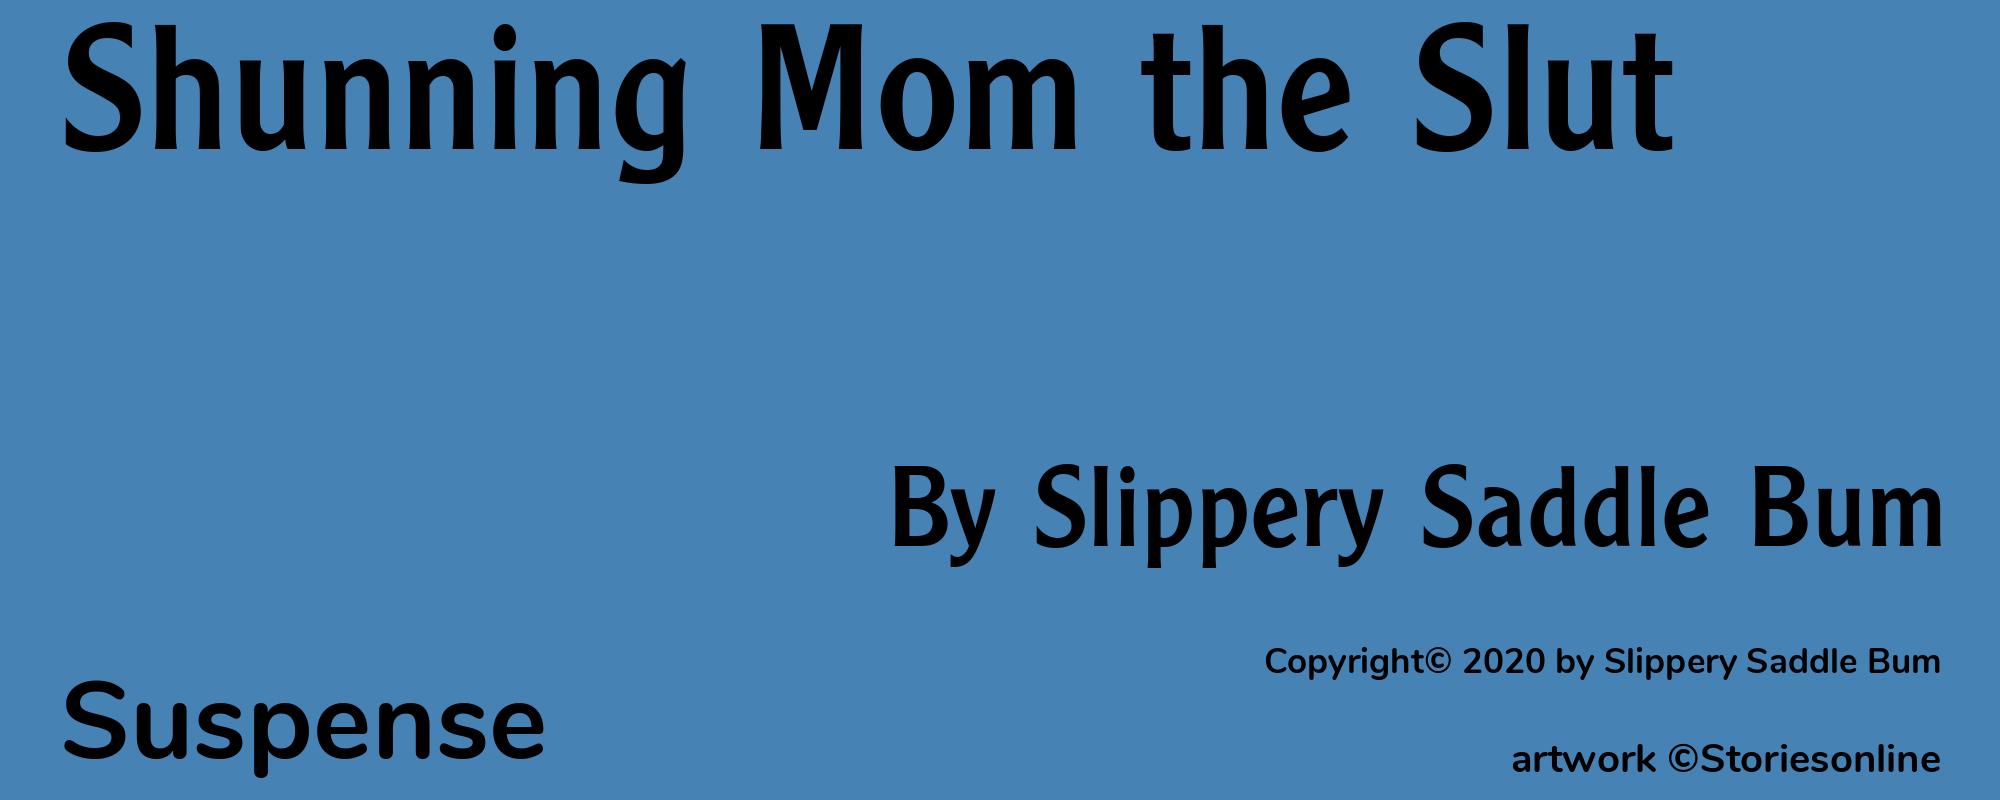 Shunning Mom the Slut - Cover